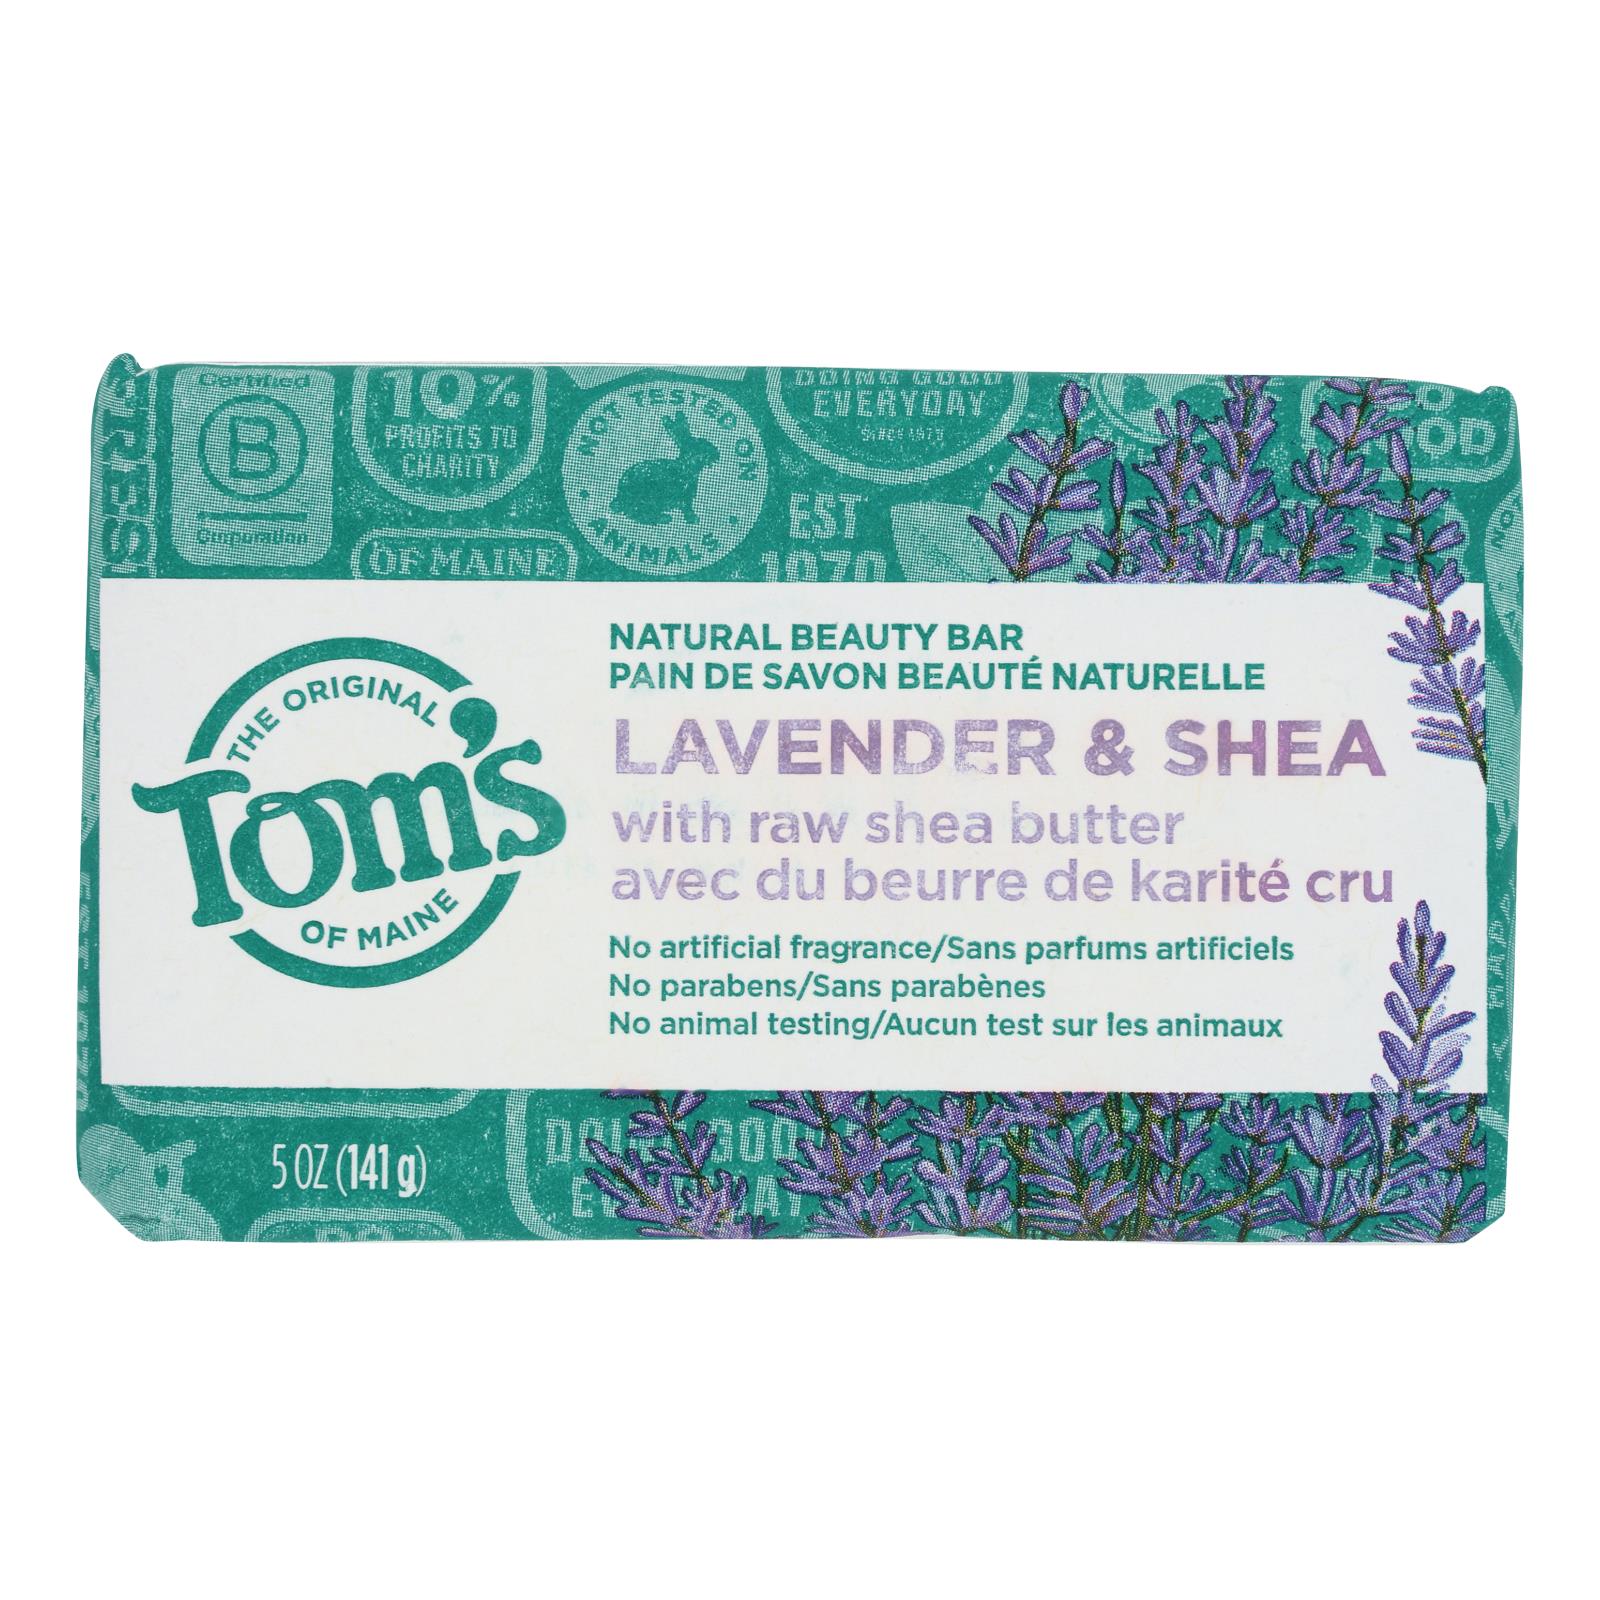 Tom's Of Maine Beauty Bar Soap - Lavender Tea Tree - Case Of 6 - 5 Oz